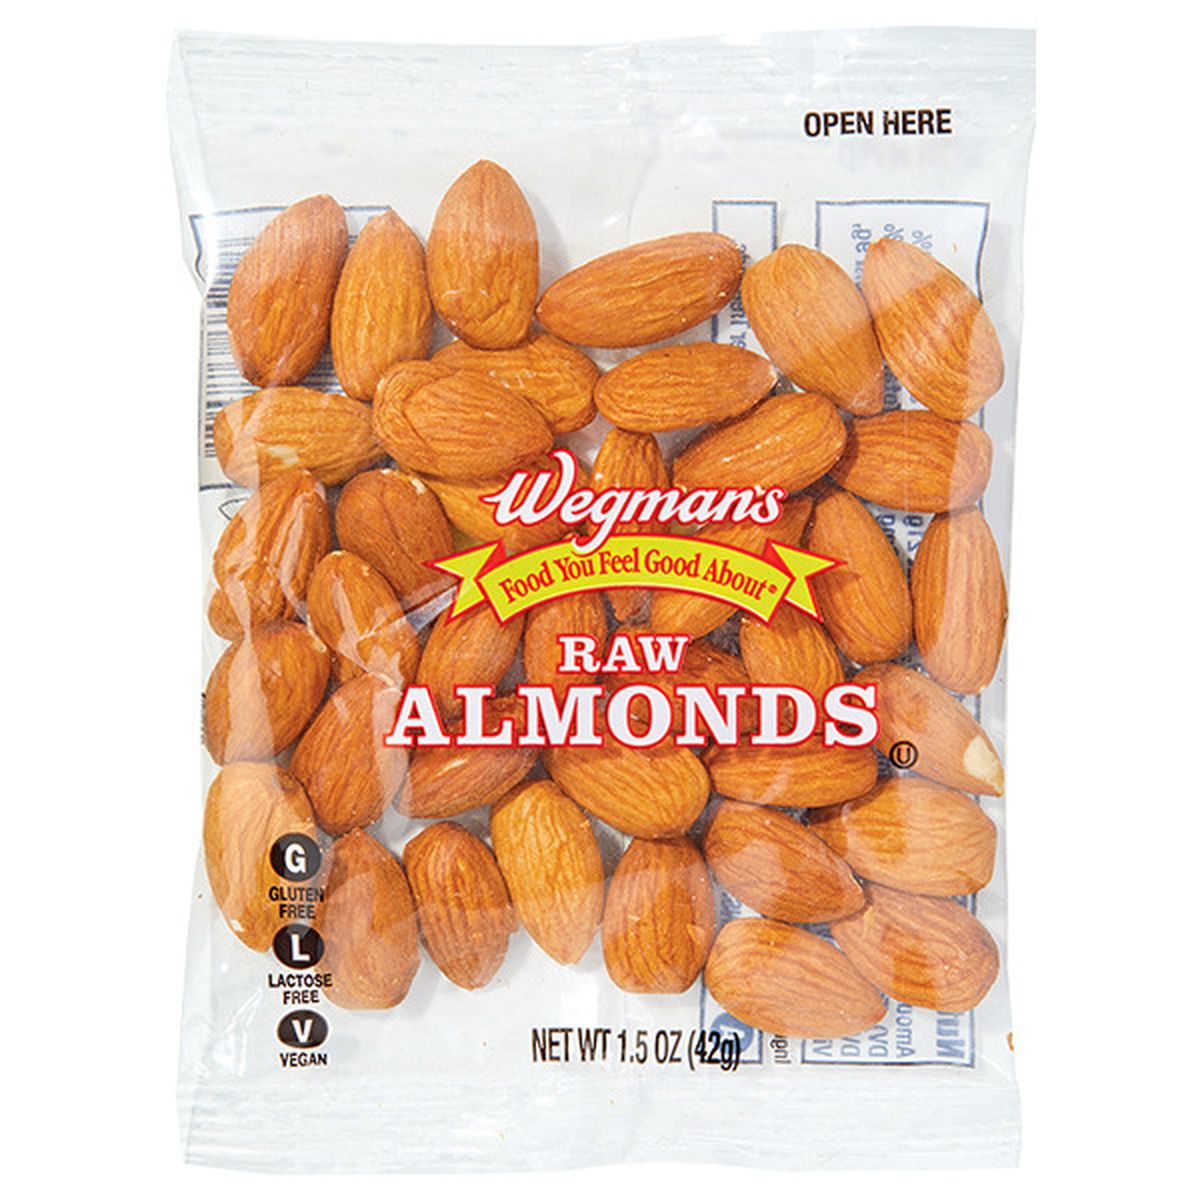 Calories in Wegmans Raw Almonds, Snack Pack